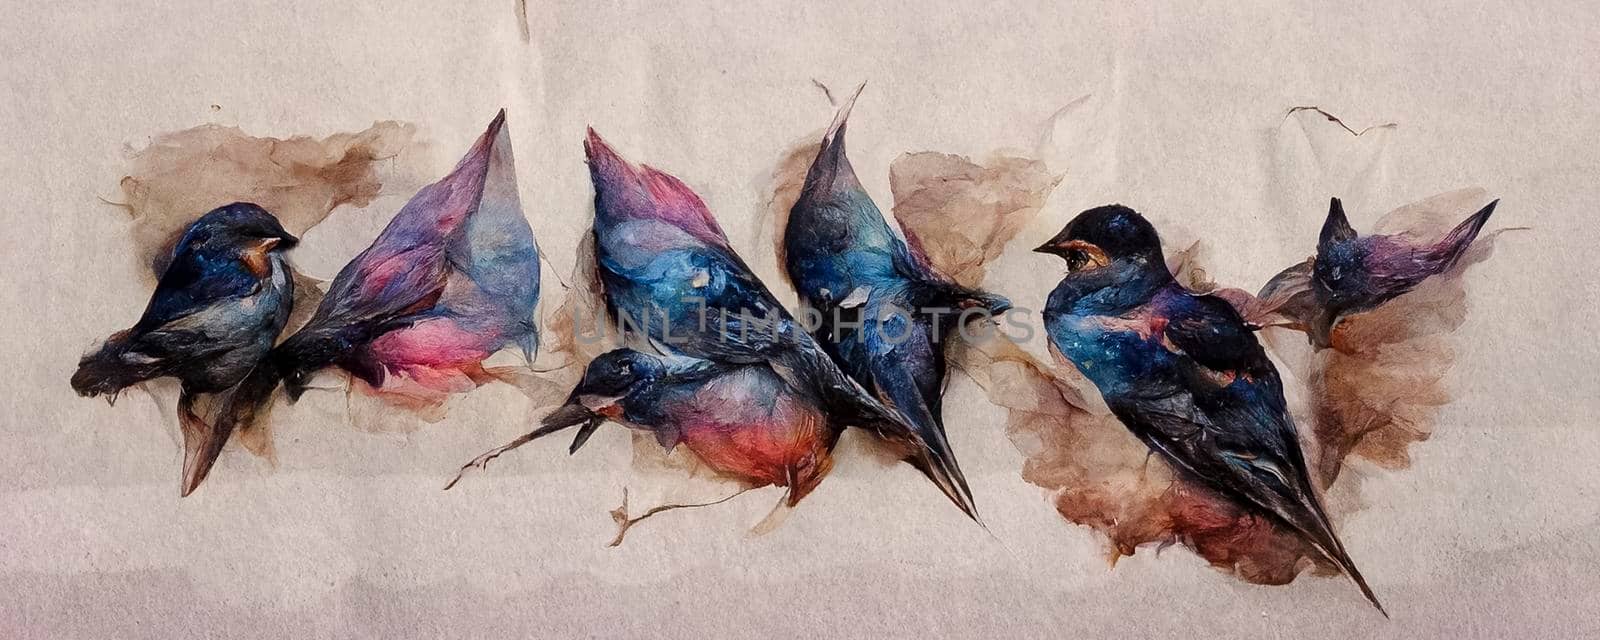 Watercolor swallows on silk canvas. CGI illustration. by jbruiz78